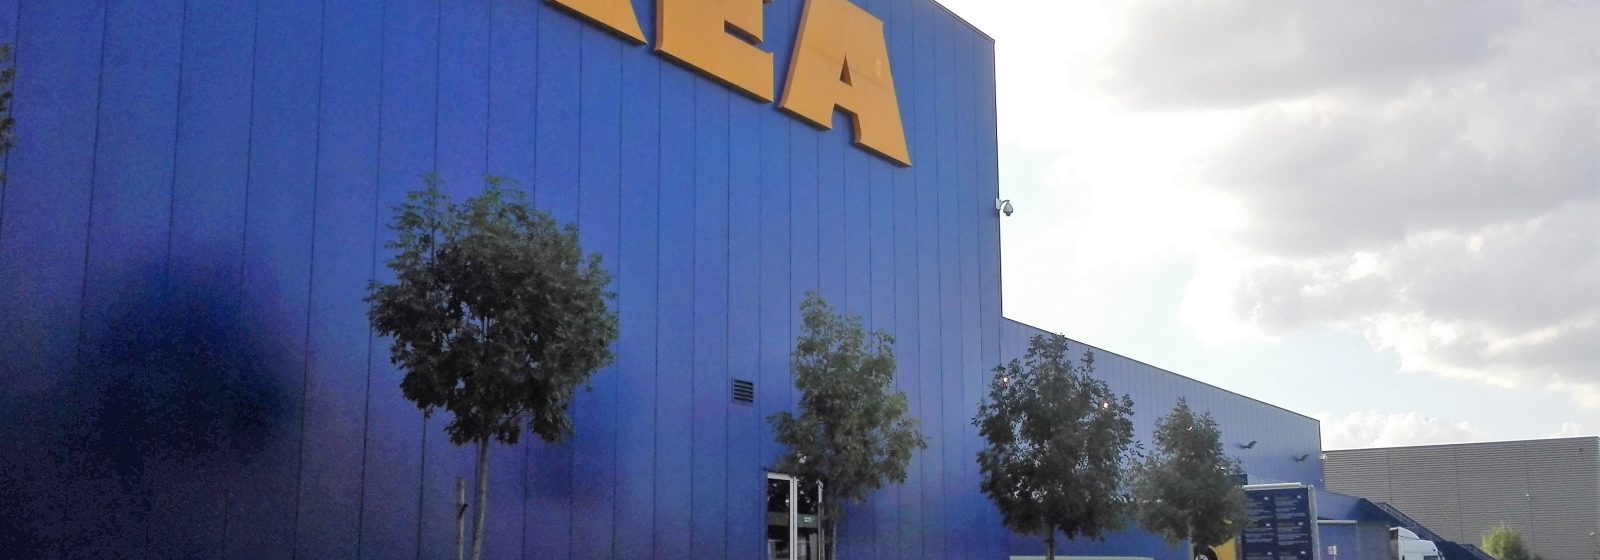 Ikea-vestiging